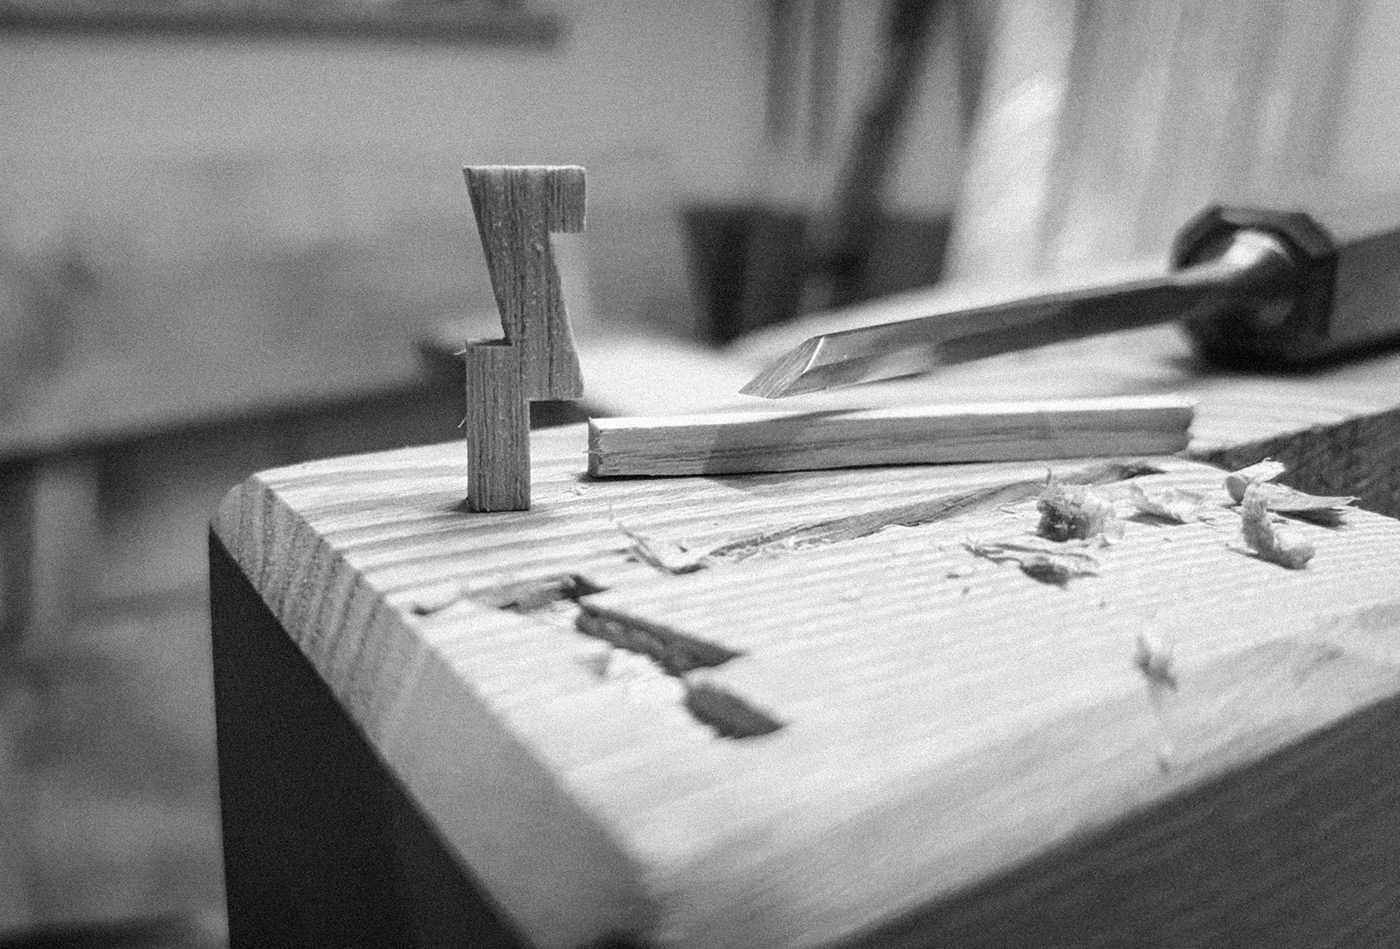 Business Cards Carpentry envelopes fine woodworking Forszty Joinery szewczyk wood Workshop branding 